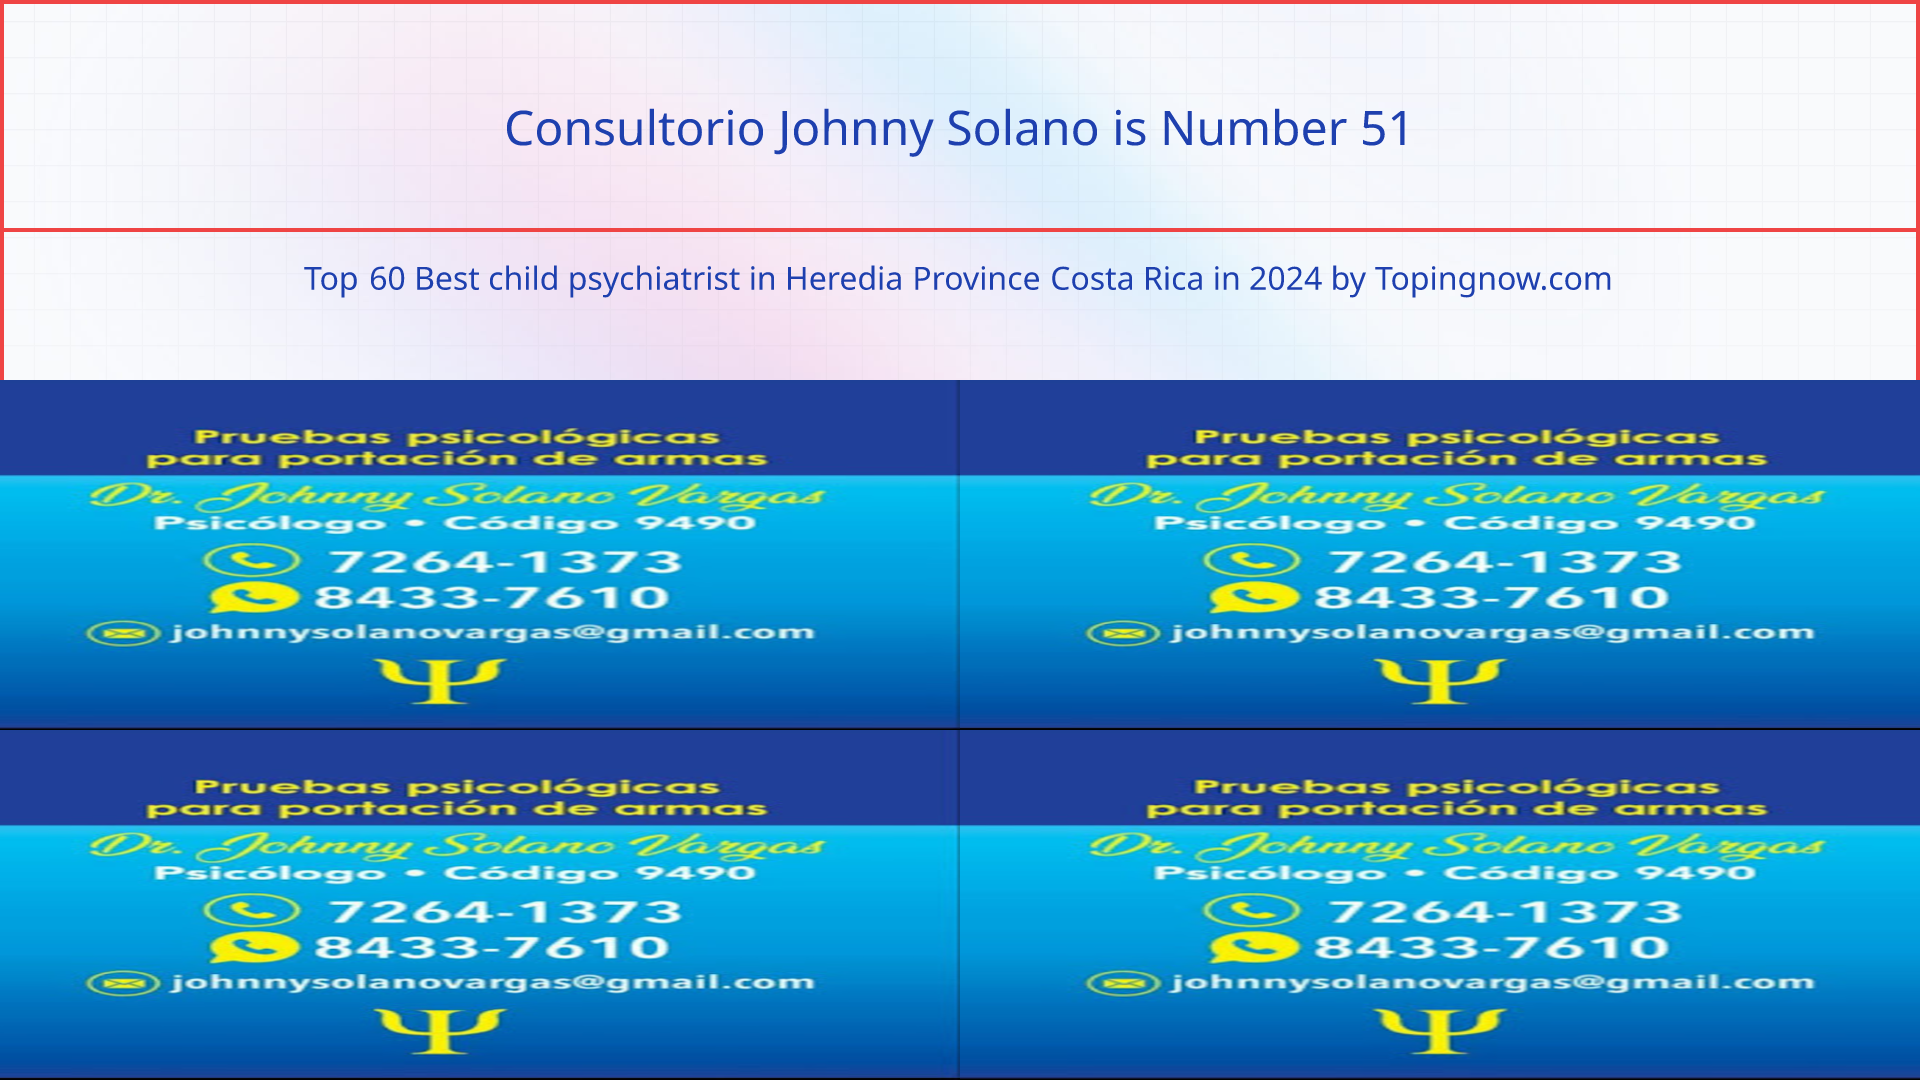 Consultorio Johnny Solano: Top 60 Best child psychiatrist in Heredia Province Costa Rica in 2024